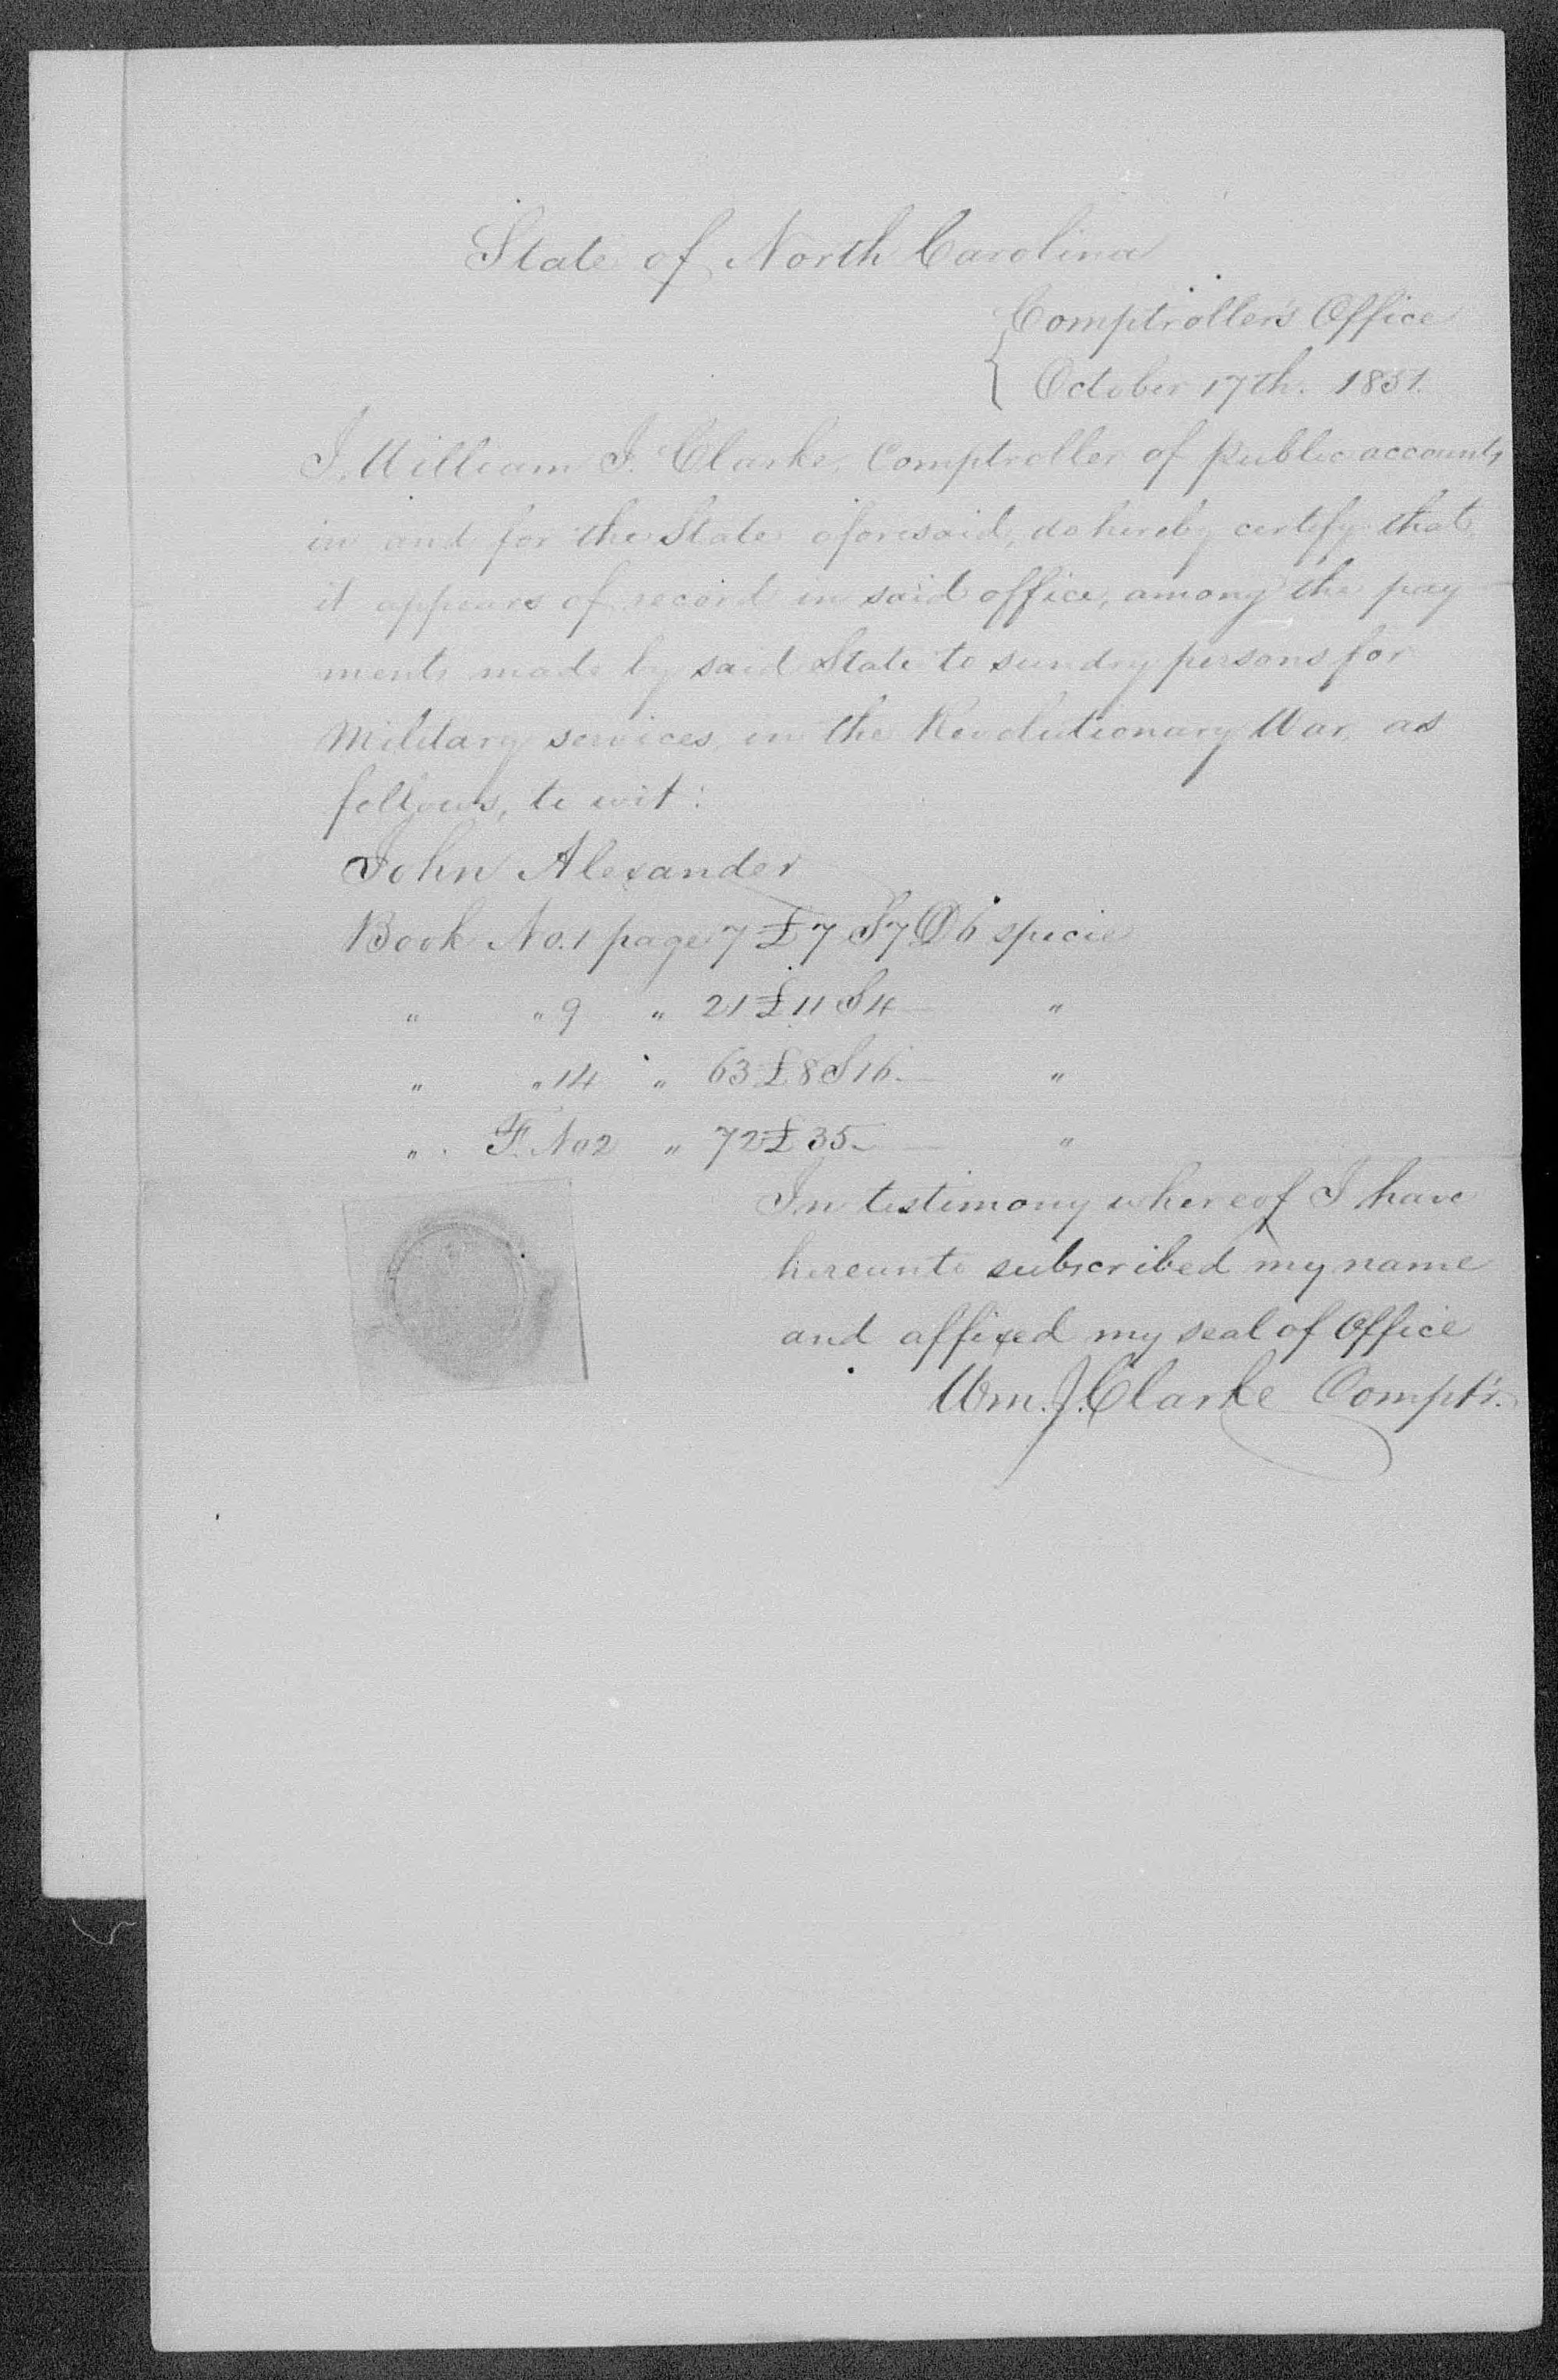 Proof of Service for John Alexander, 17 October 1851